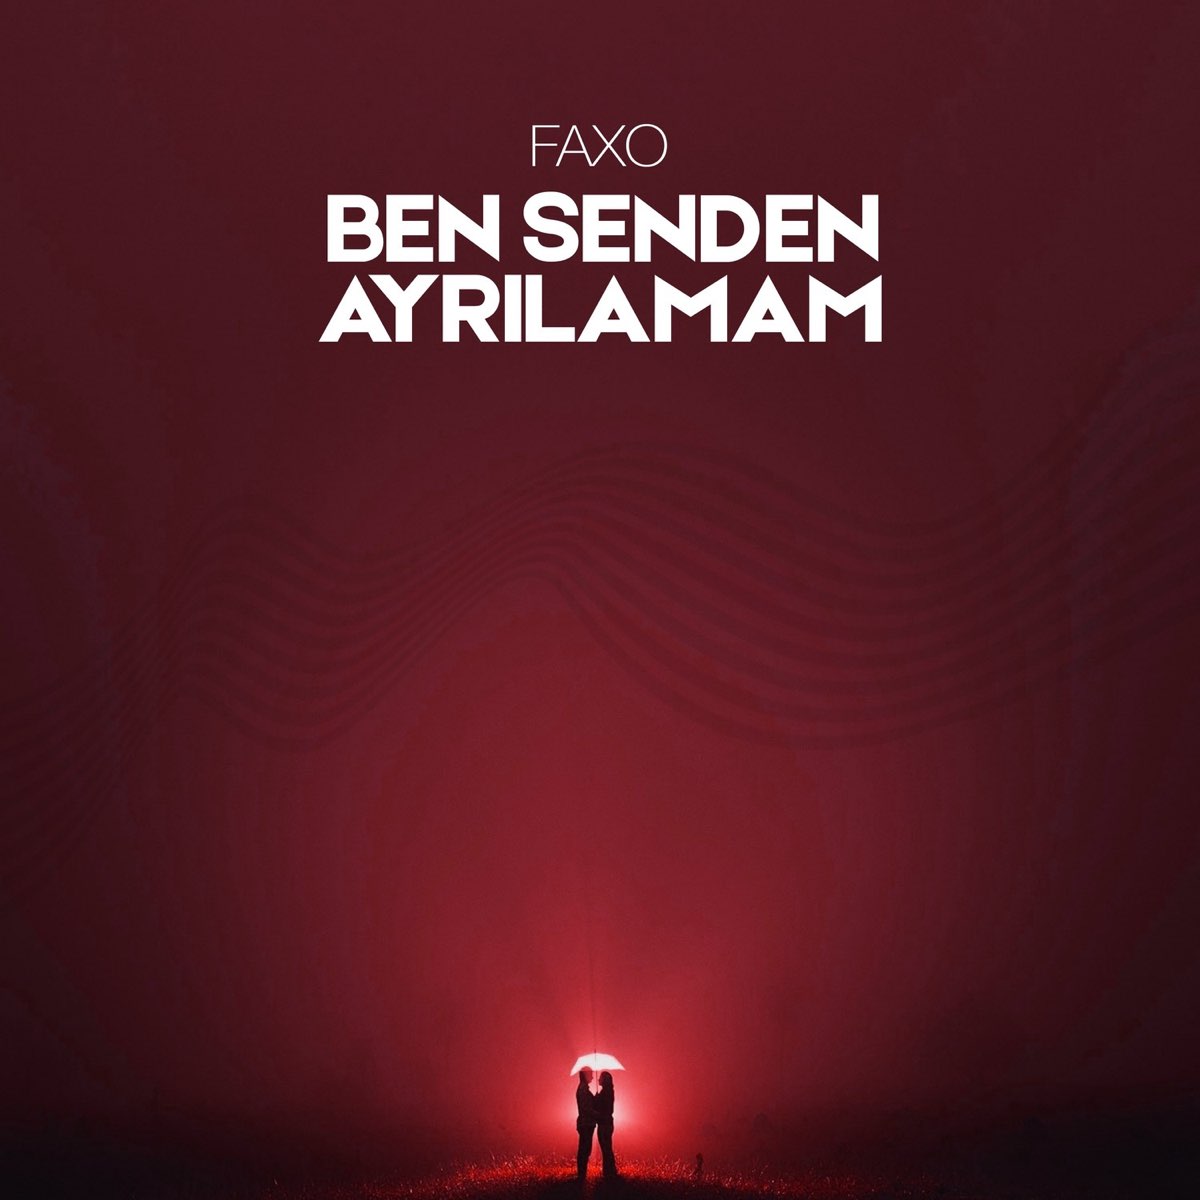 Ben Senden Ayrilamam - Single by Faxo on Apple Music